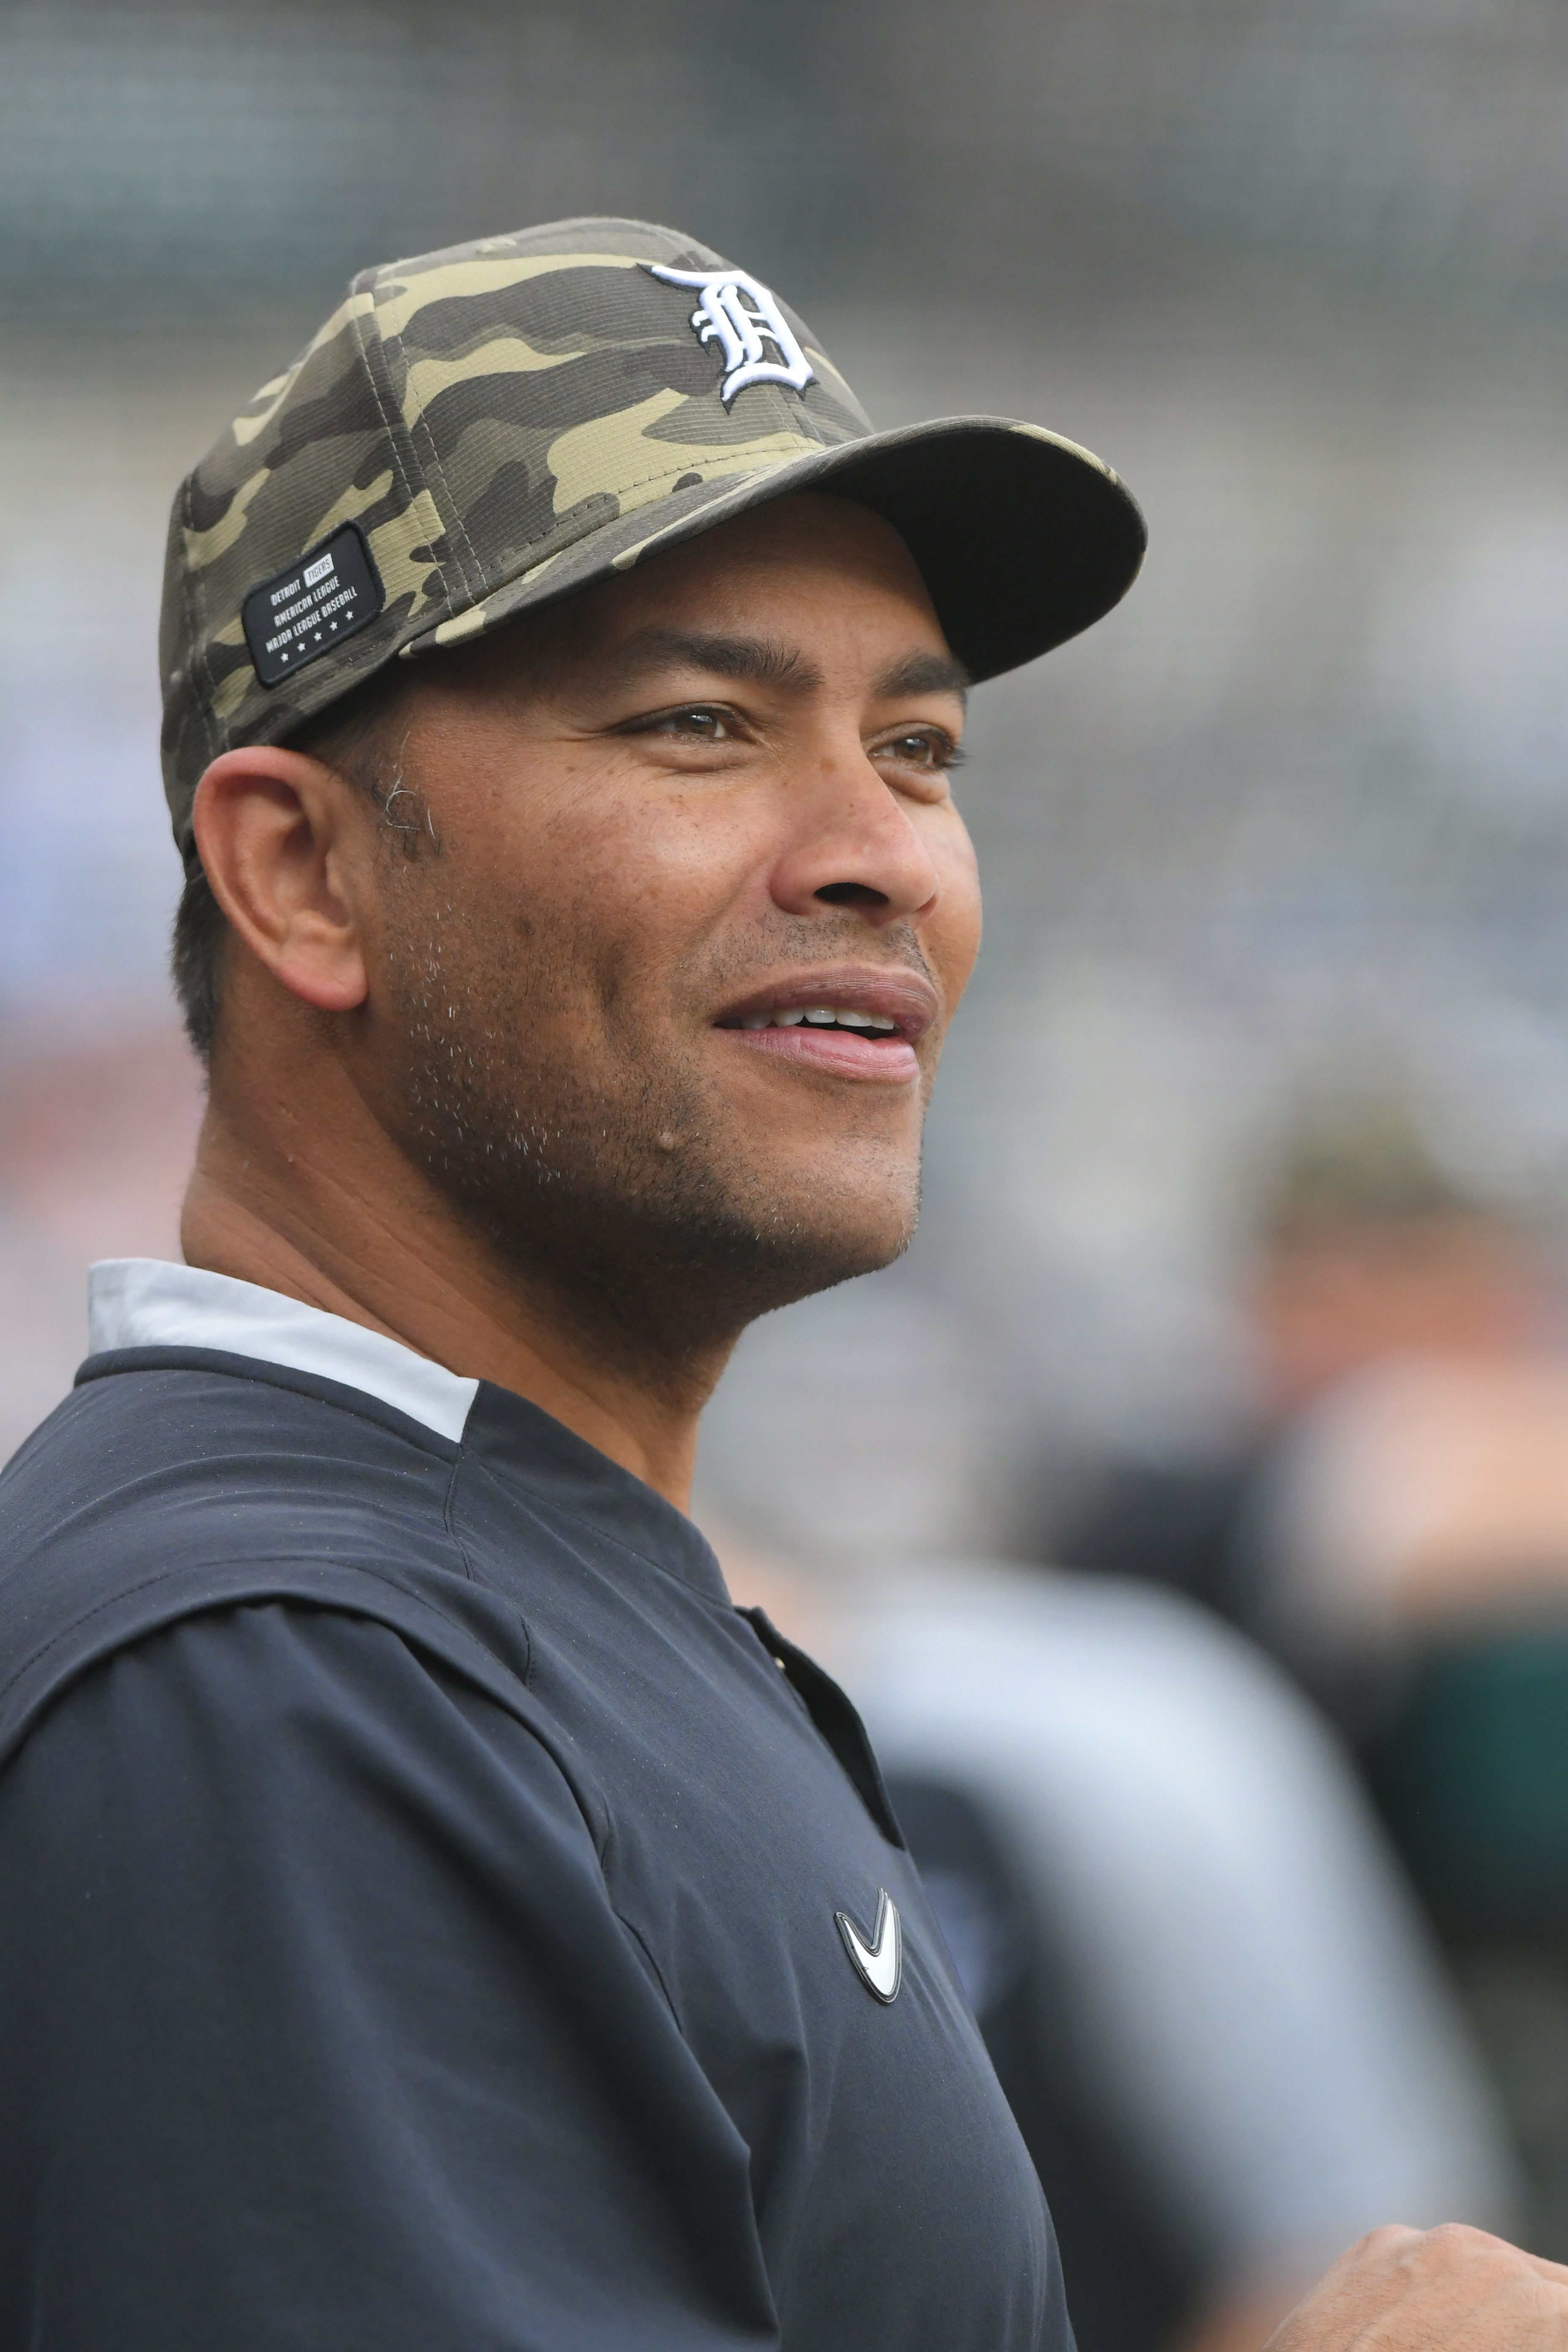 José Cruz Jr. joins Tigers' coaching staff